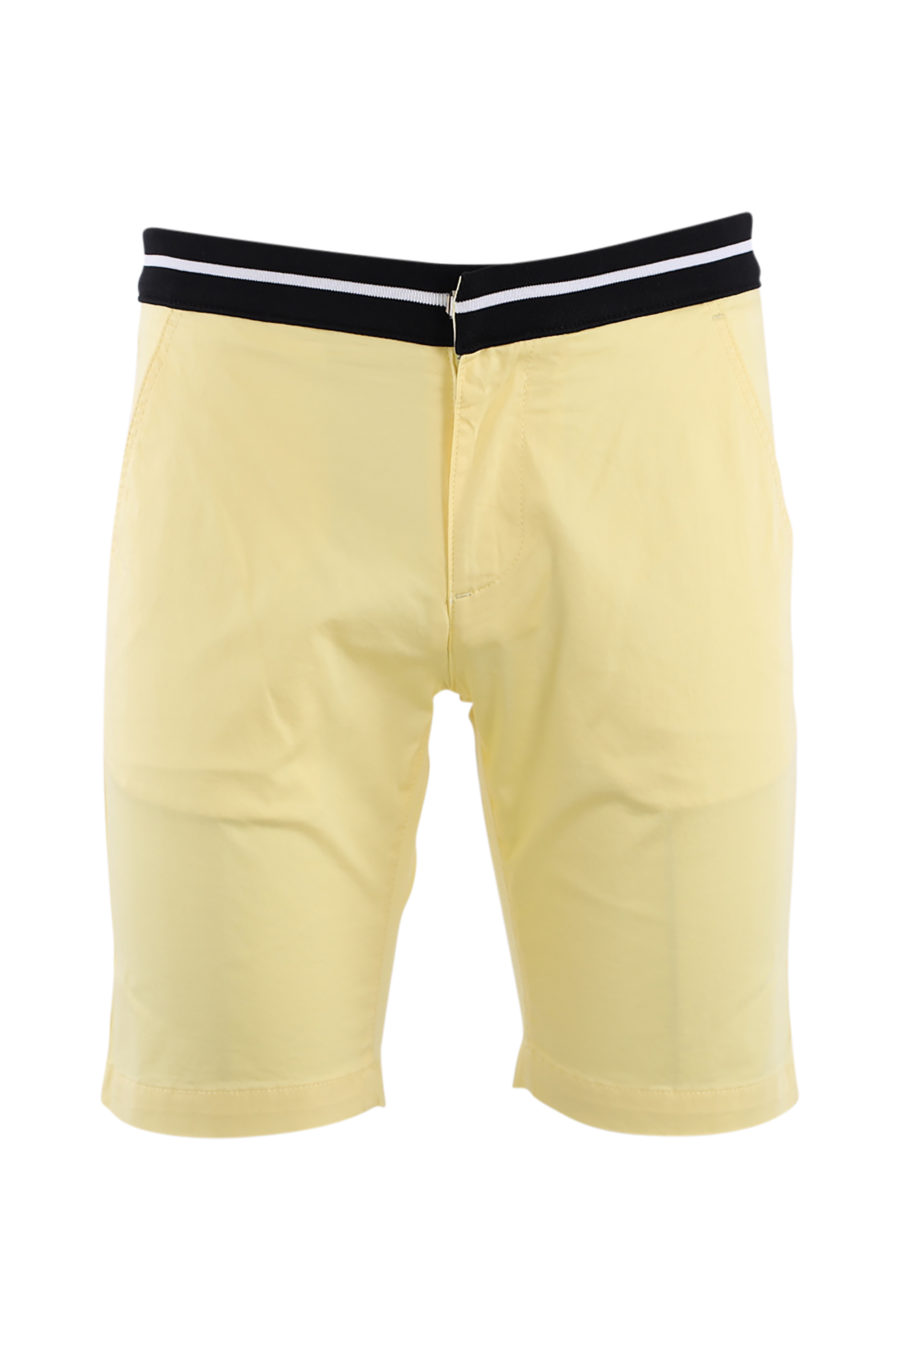 Pantalón corto amarillo - IMG 8852